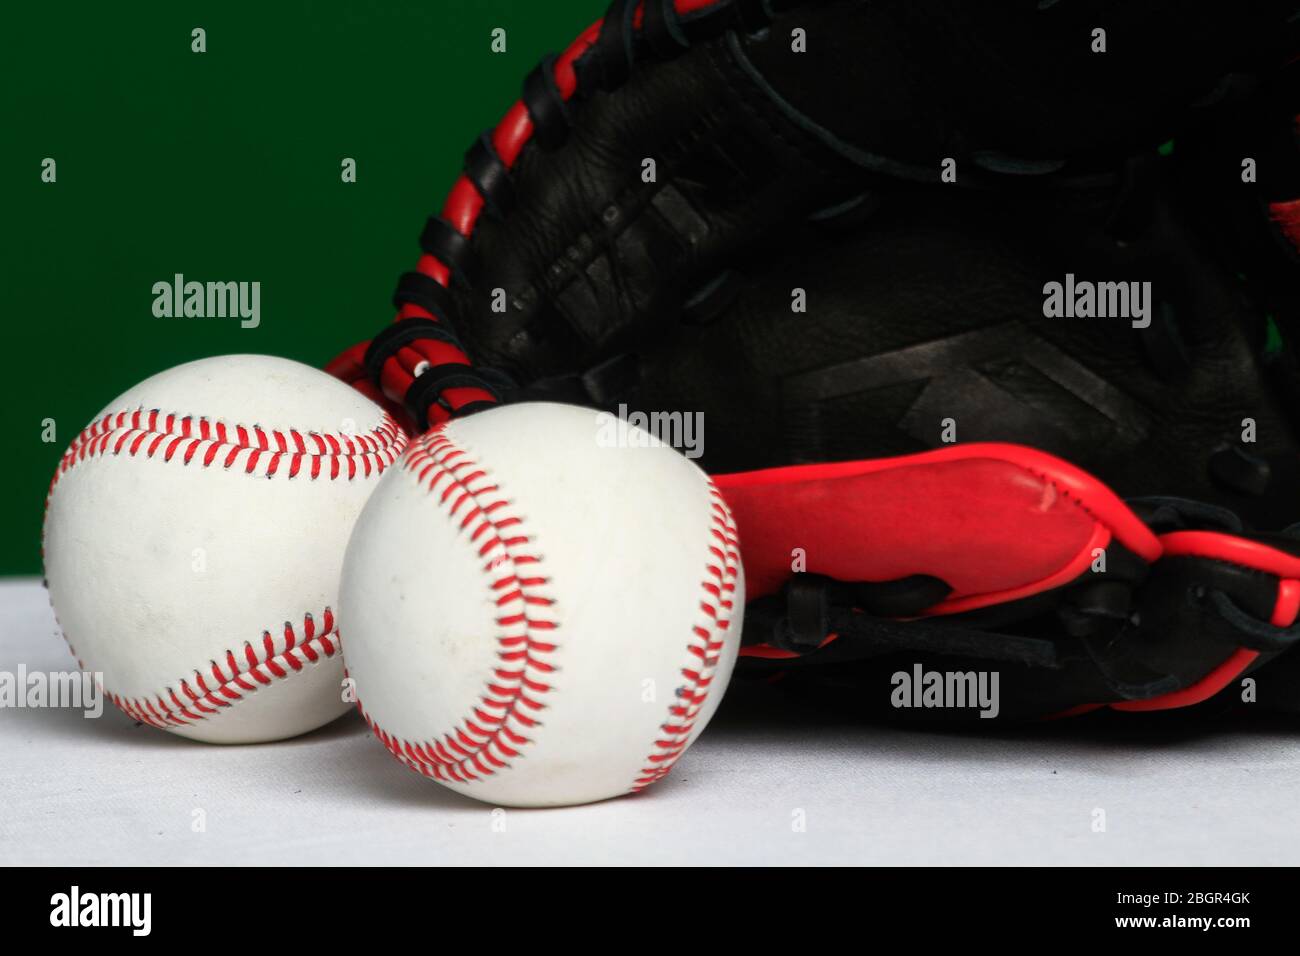 Handschuh, Ball, Fledermaus, Baseball-Zubehör, Baseball-Ausrüstung, Guante,  Pelota, Fledermaus, accesorios del Besbol, Equipamento de Beisbol, (Foto:  Luis Gu Stockfotografie - Alamy